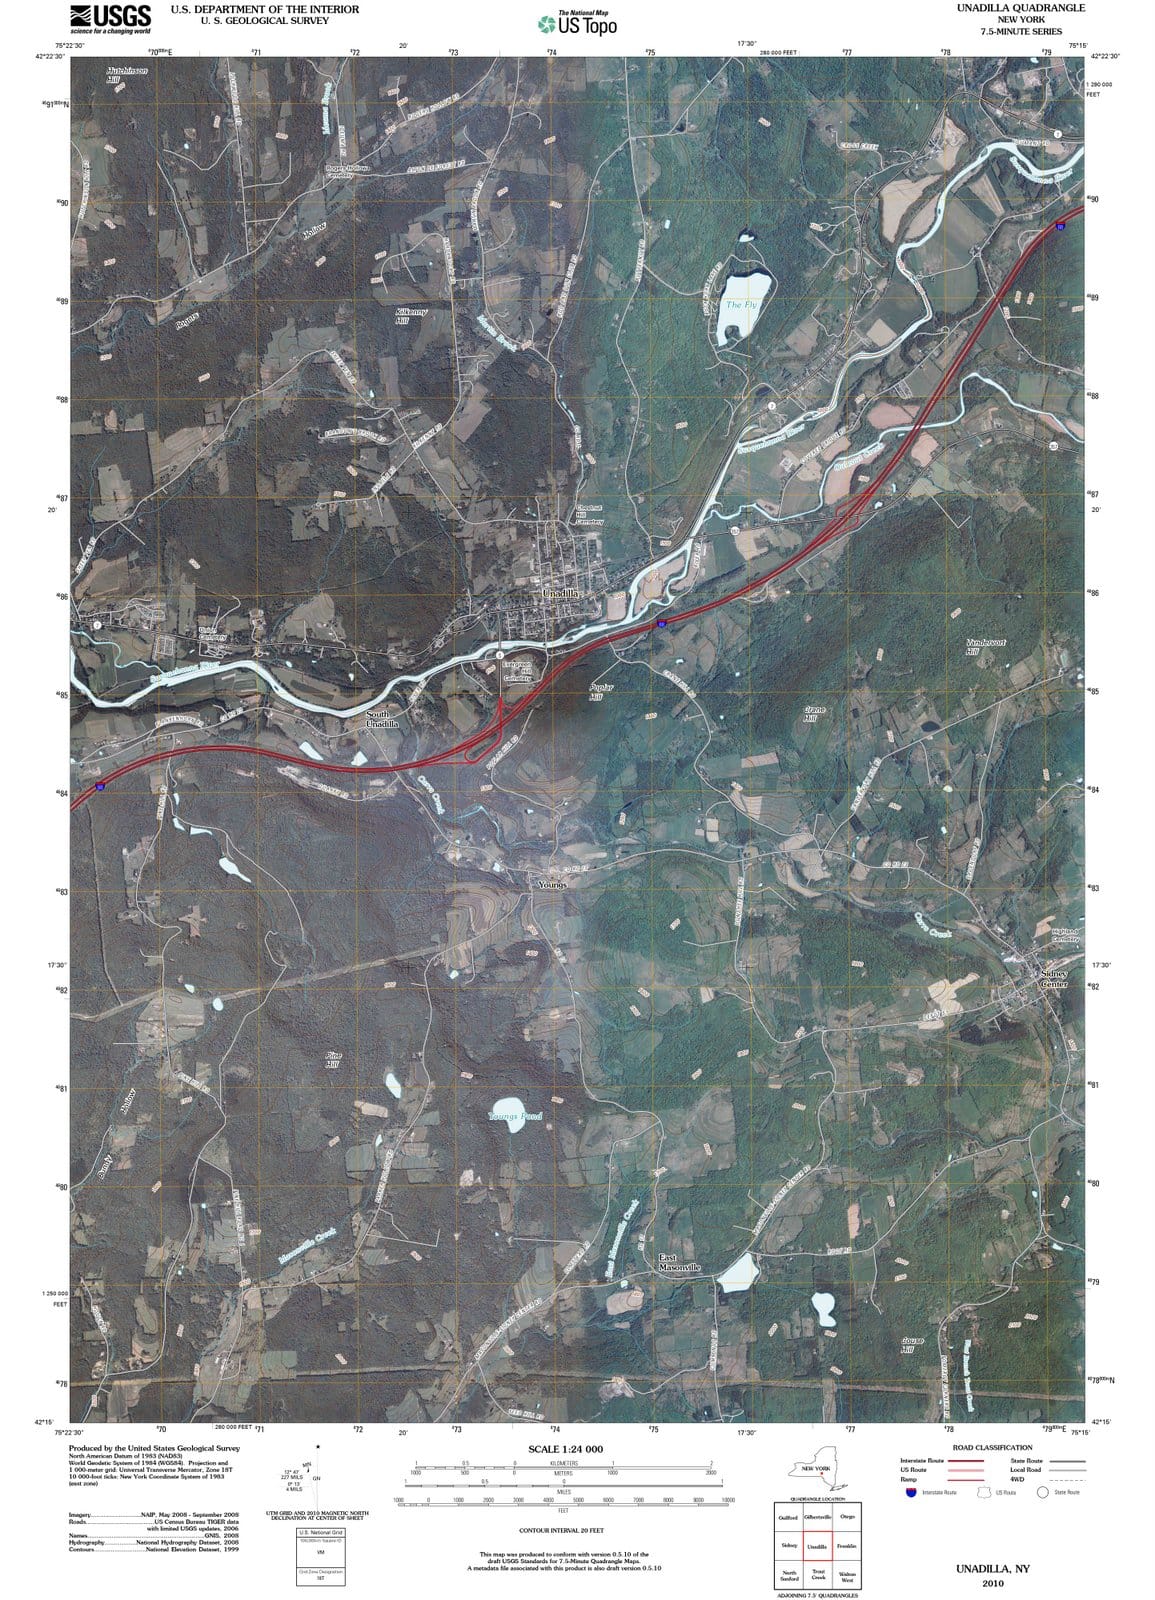 2010 Unadilla, NY - New York - USGS Topographic Map